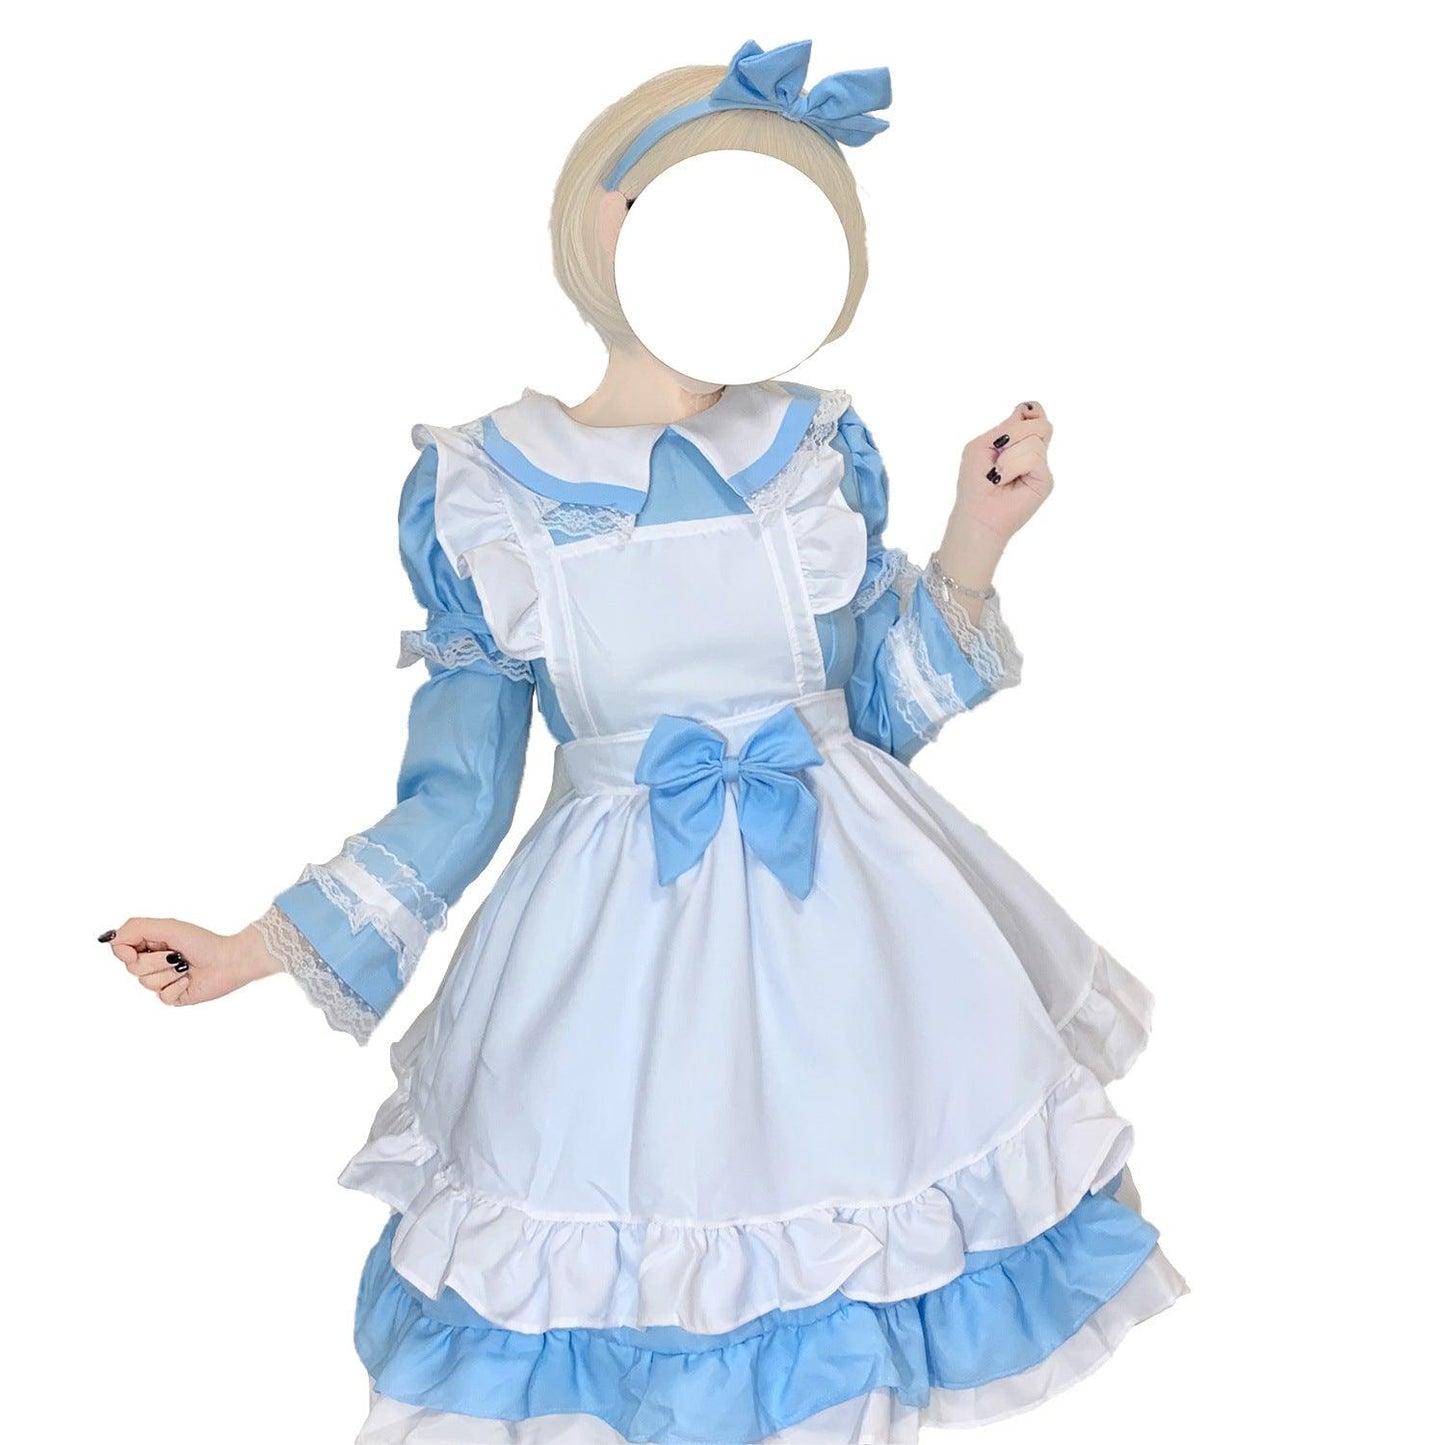 Alice Wonderland Anime Maid Outfit Lolita Dress Cute Fancy Black Dress Cosplay Costume